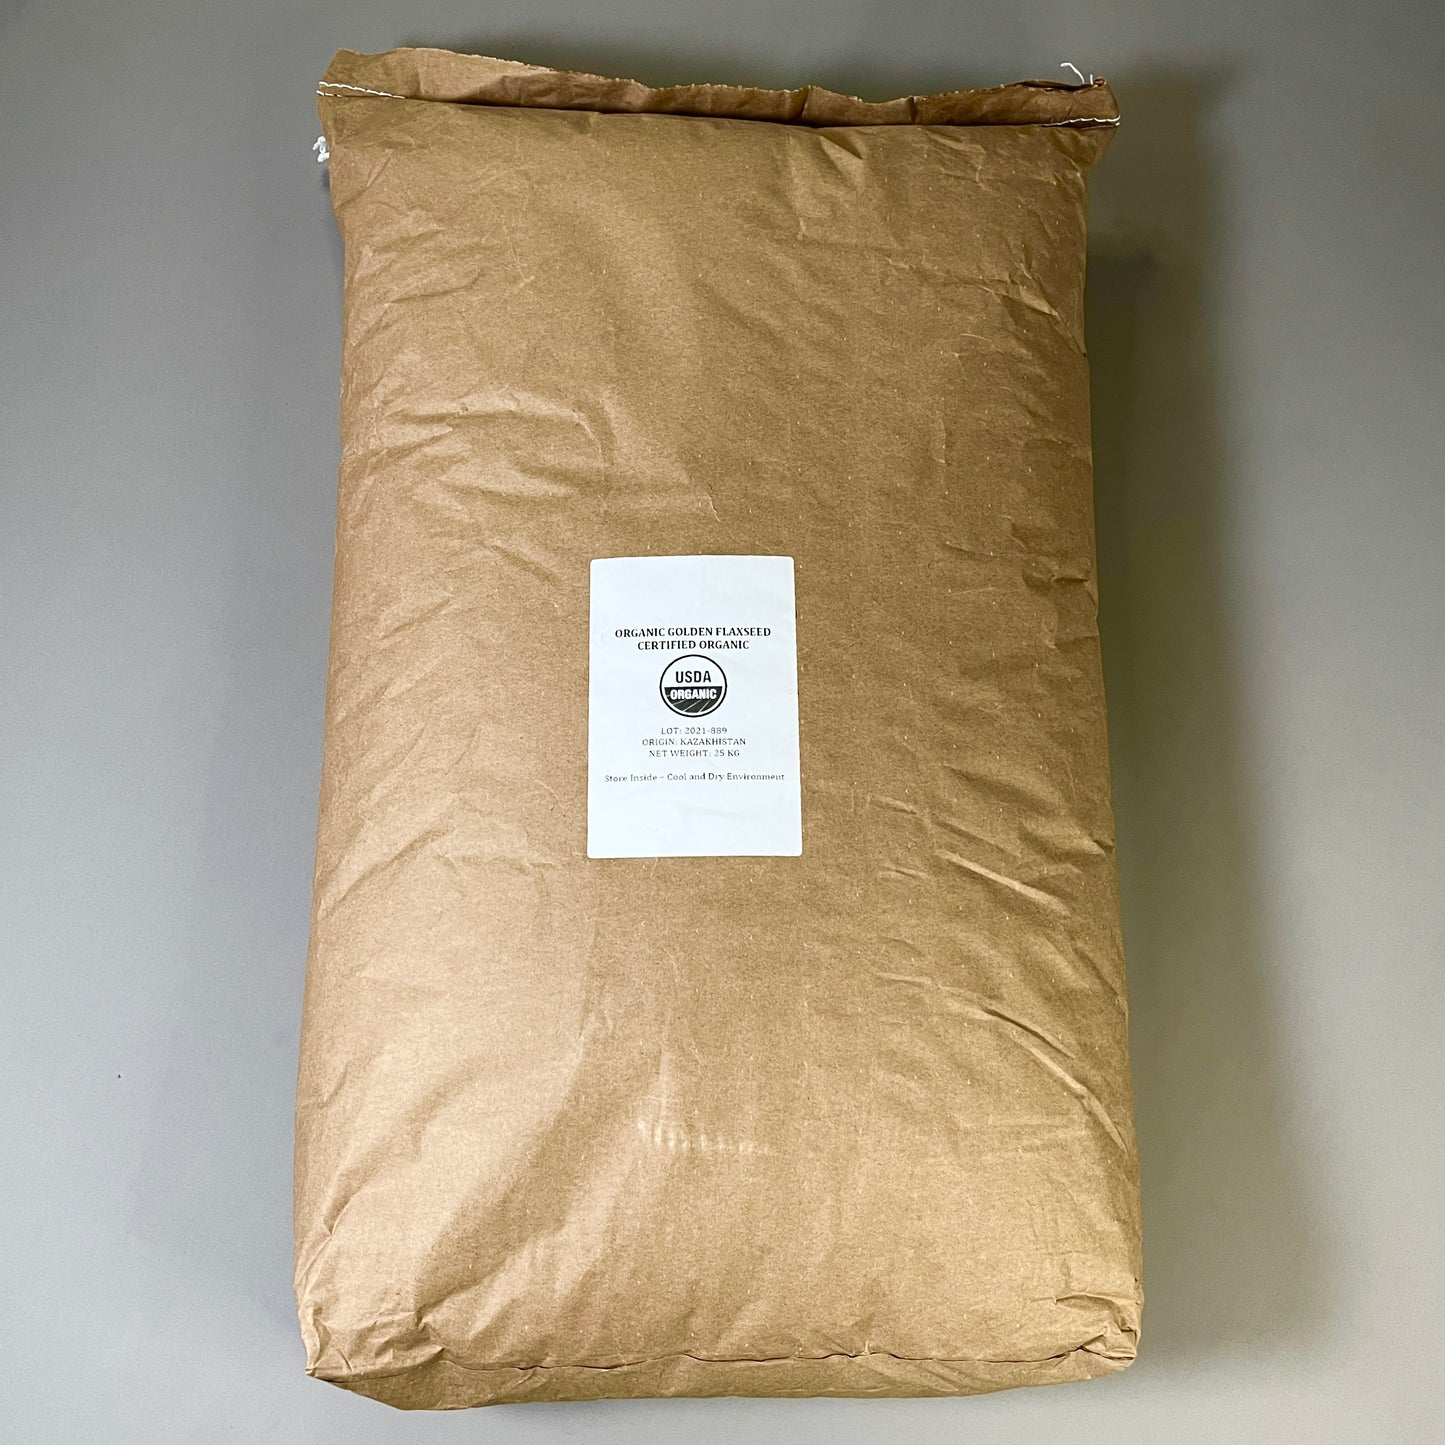 ZA@ ORGANIC GOLDEN FLAXSEED 54 lb Bag (Certified Organic) 25 KG Kazakhstan 2021 (AS-IS)